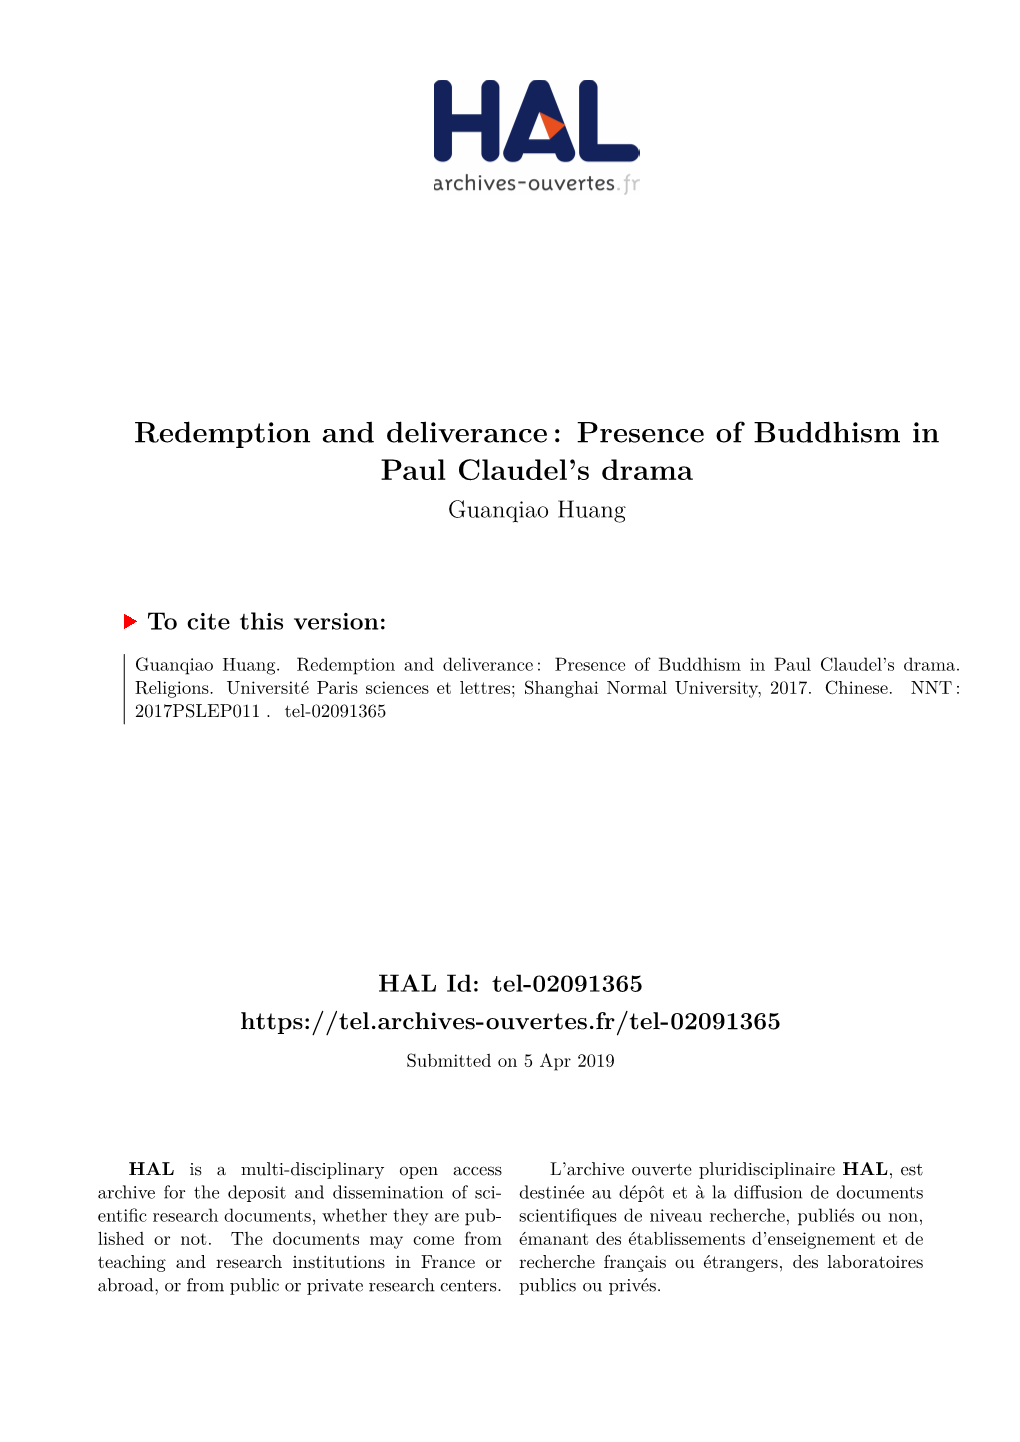 Presence of Buddhism in Paul Claudel's Drama